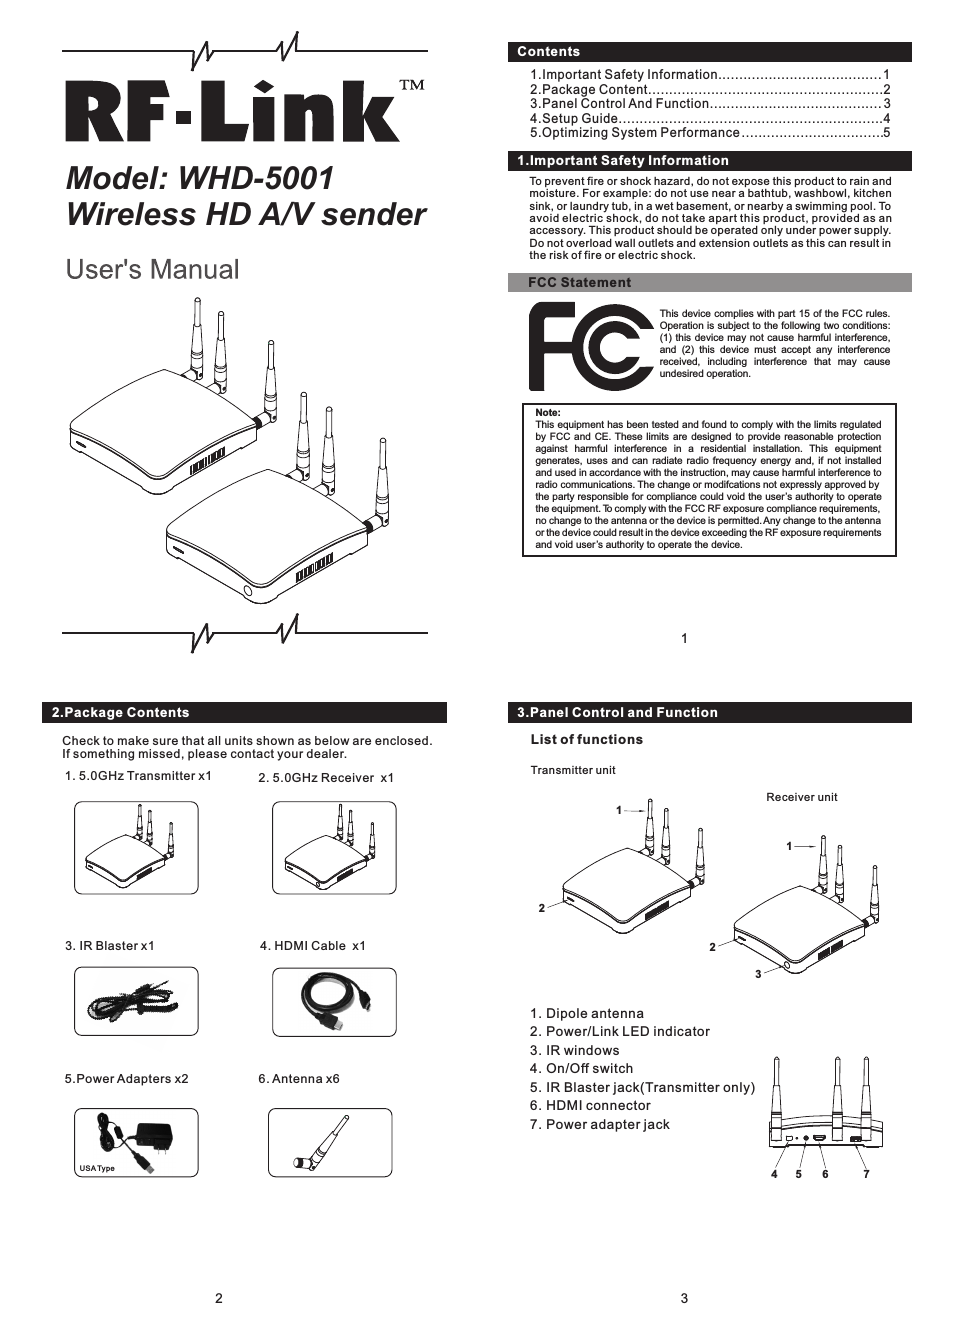 WHD-5001 Wireless HD A/V sender